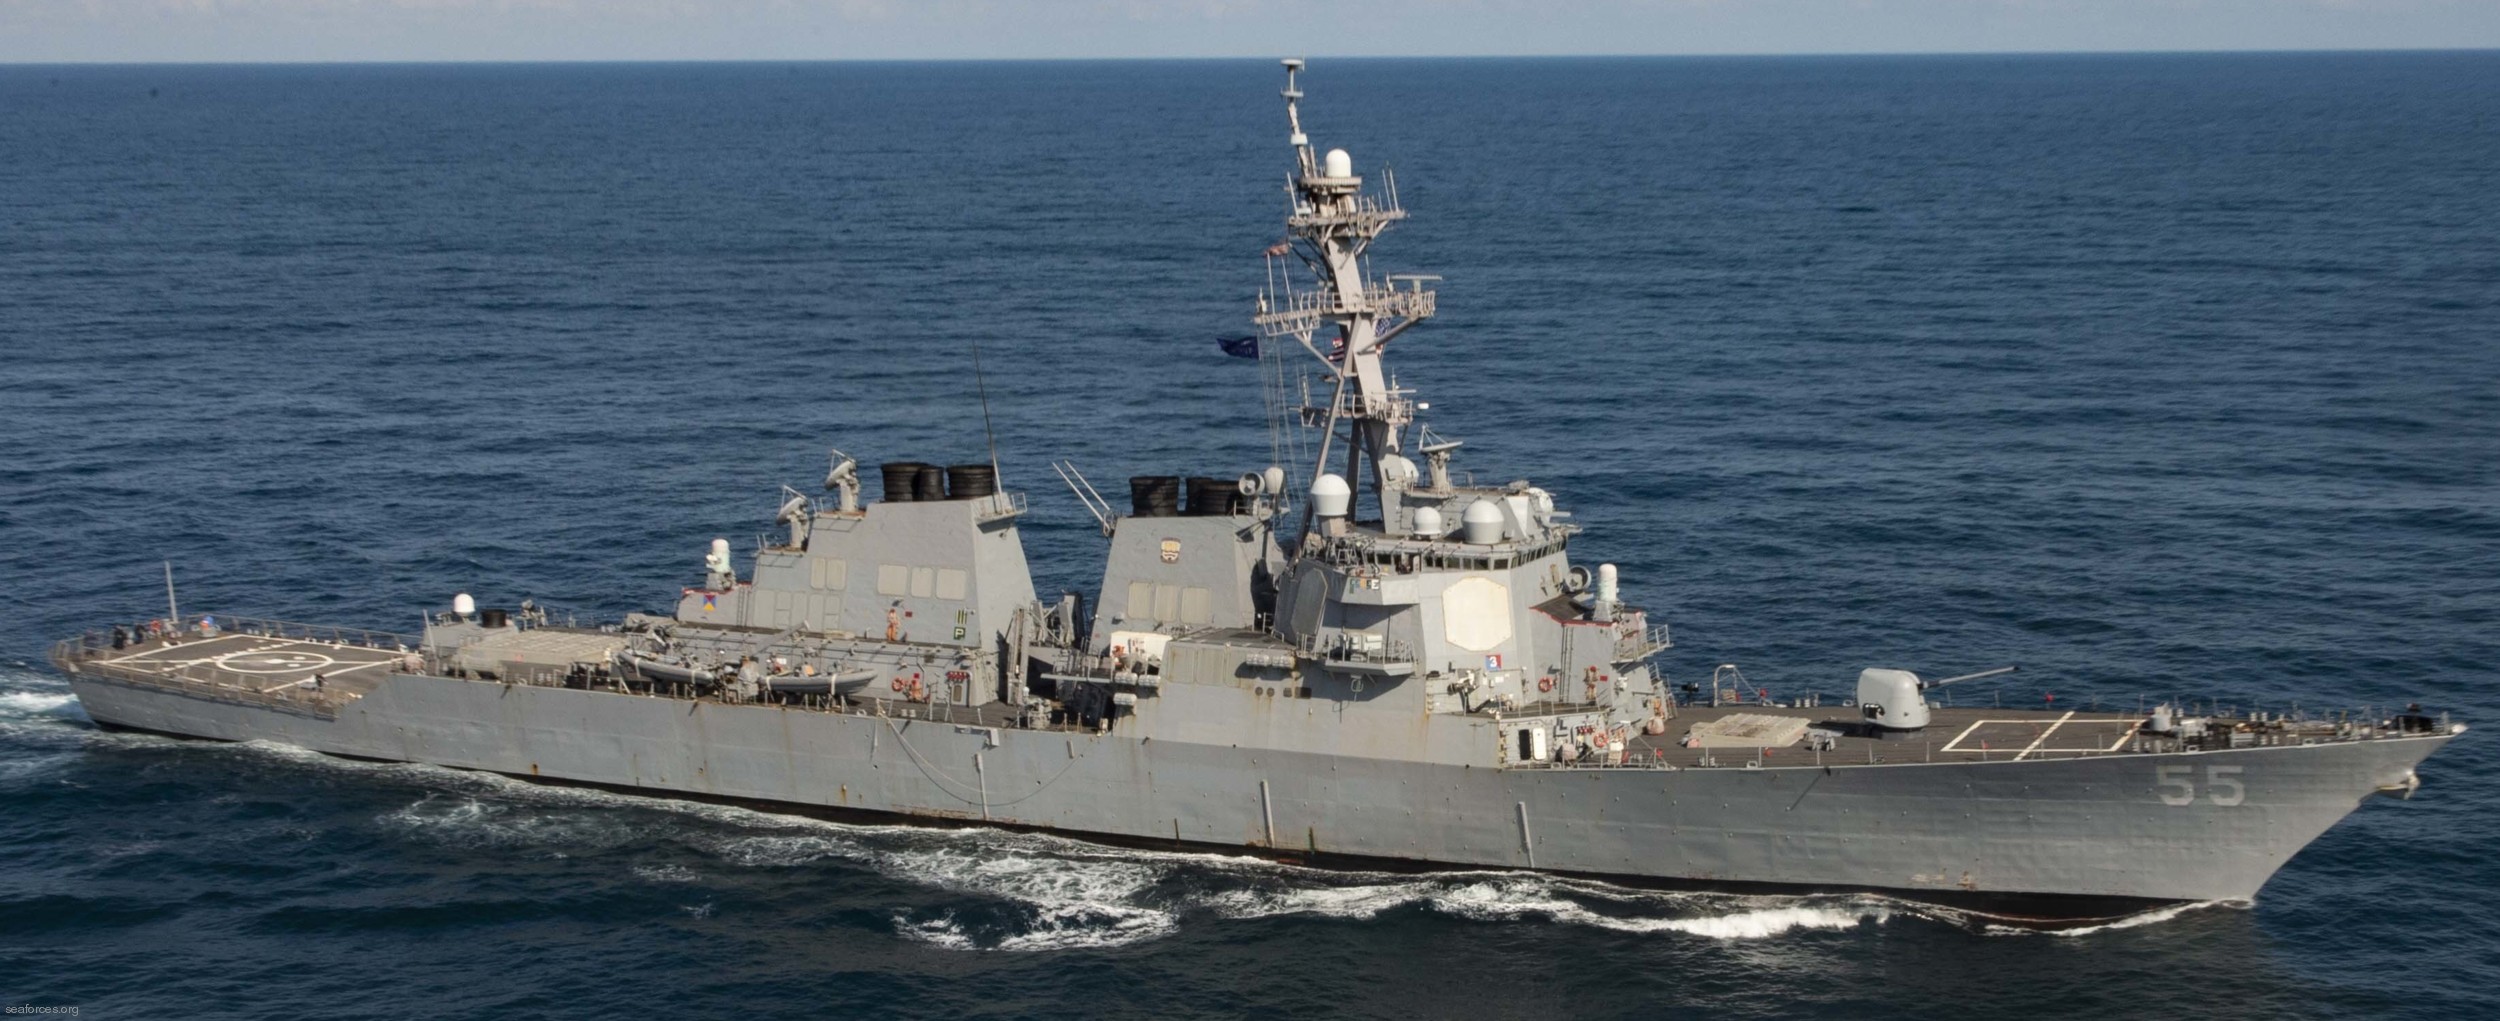 ddg-55 uss stout arleigh burke class guided missile destroyer us navy 94 atlantic ocean